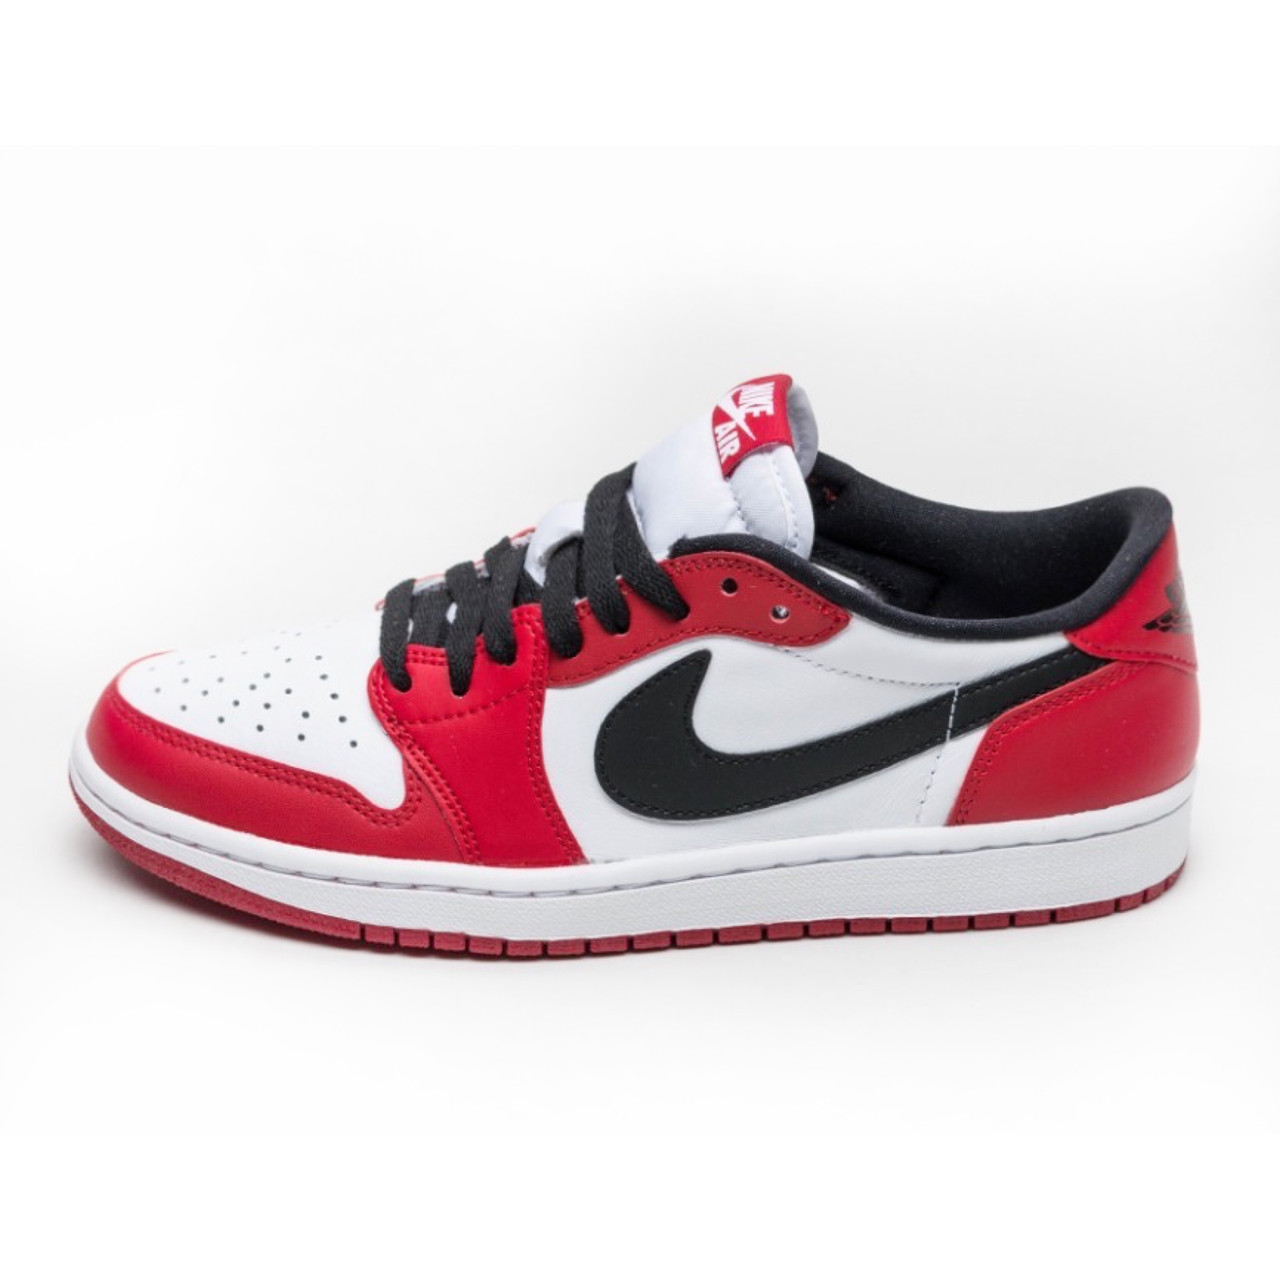 Низкие джорданы 1. Nike Air Jordan 1 Low Red. Nike Air Jordan 1 Low Red Black White. Nike Air Jordan 1 Low Red Black. Nike Jordan 1 Low Red.